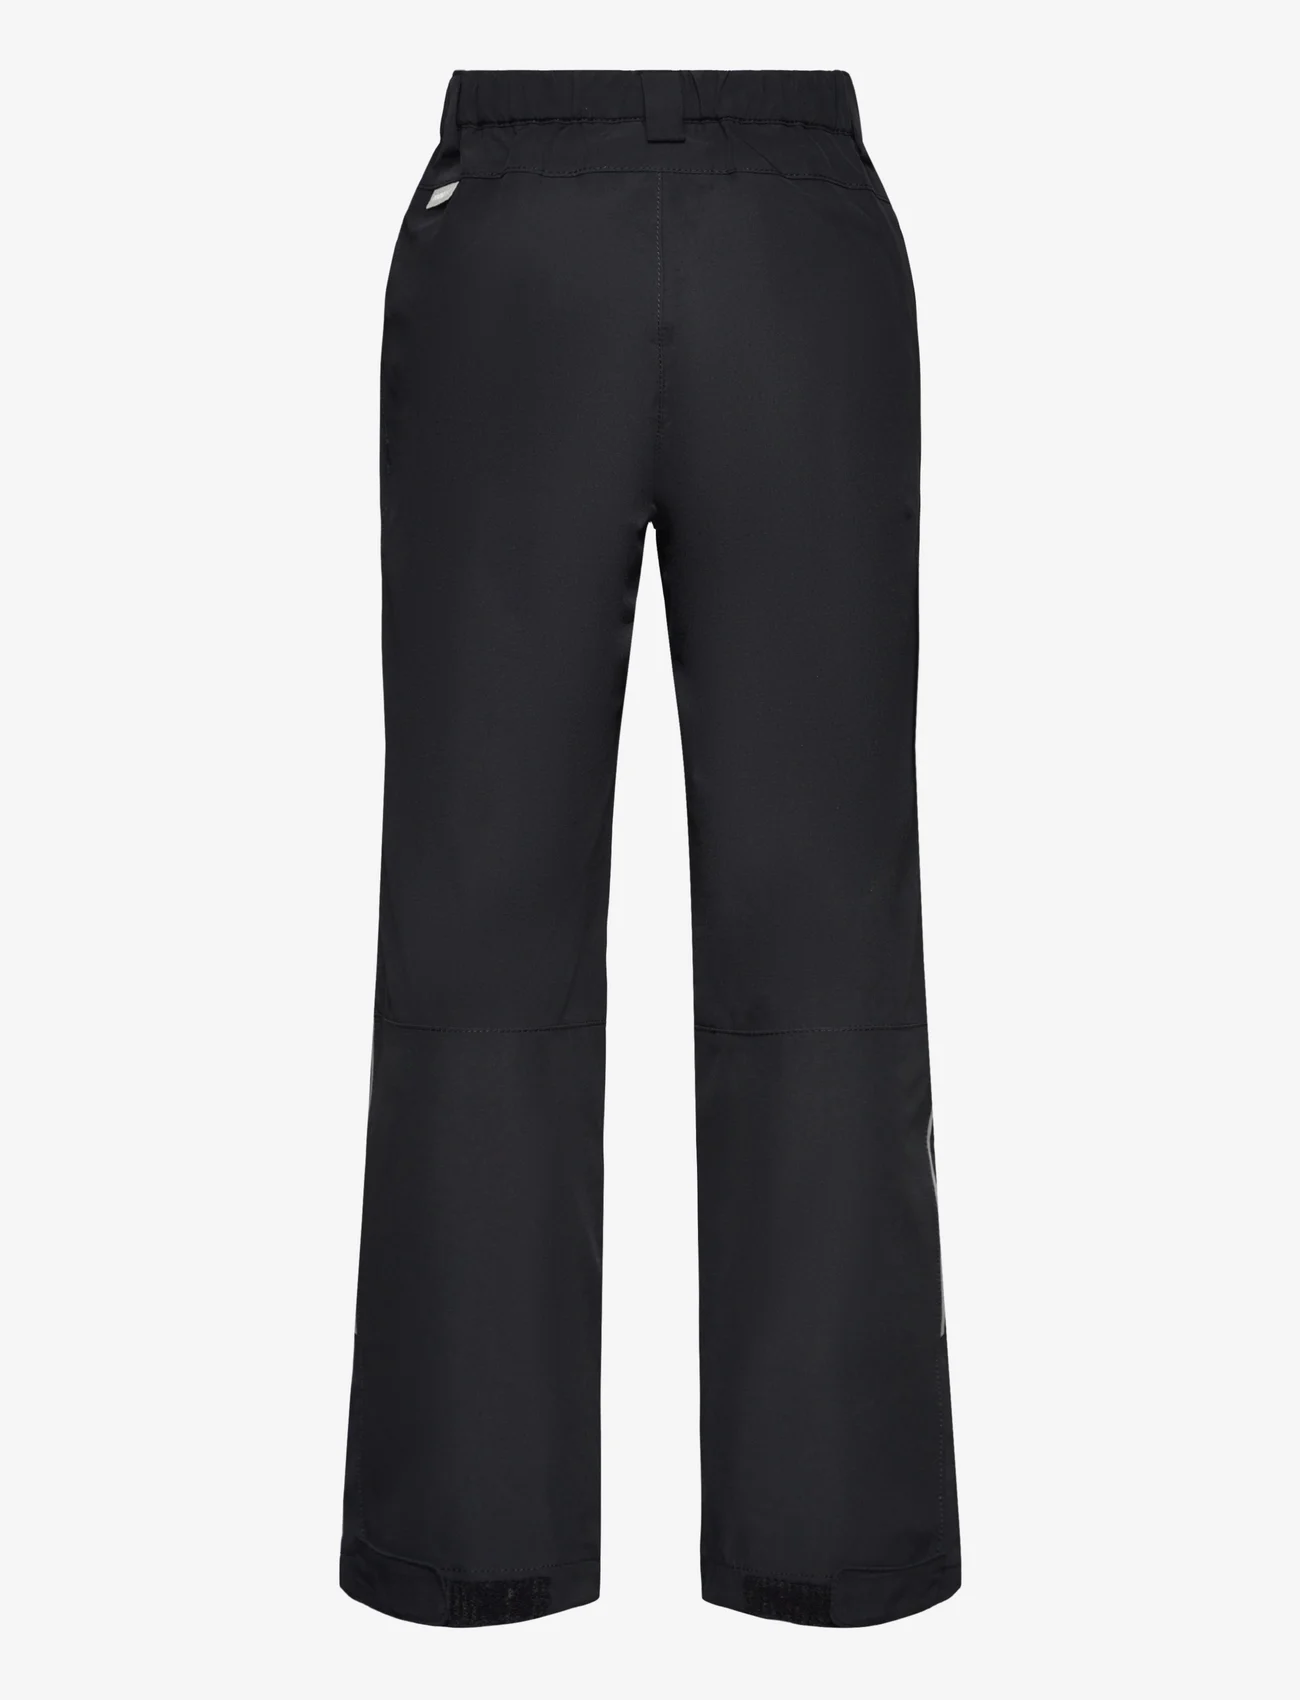 Reima - Reimatec pants, Kunto - outdoorhosen - black - 1